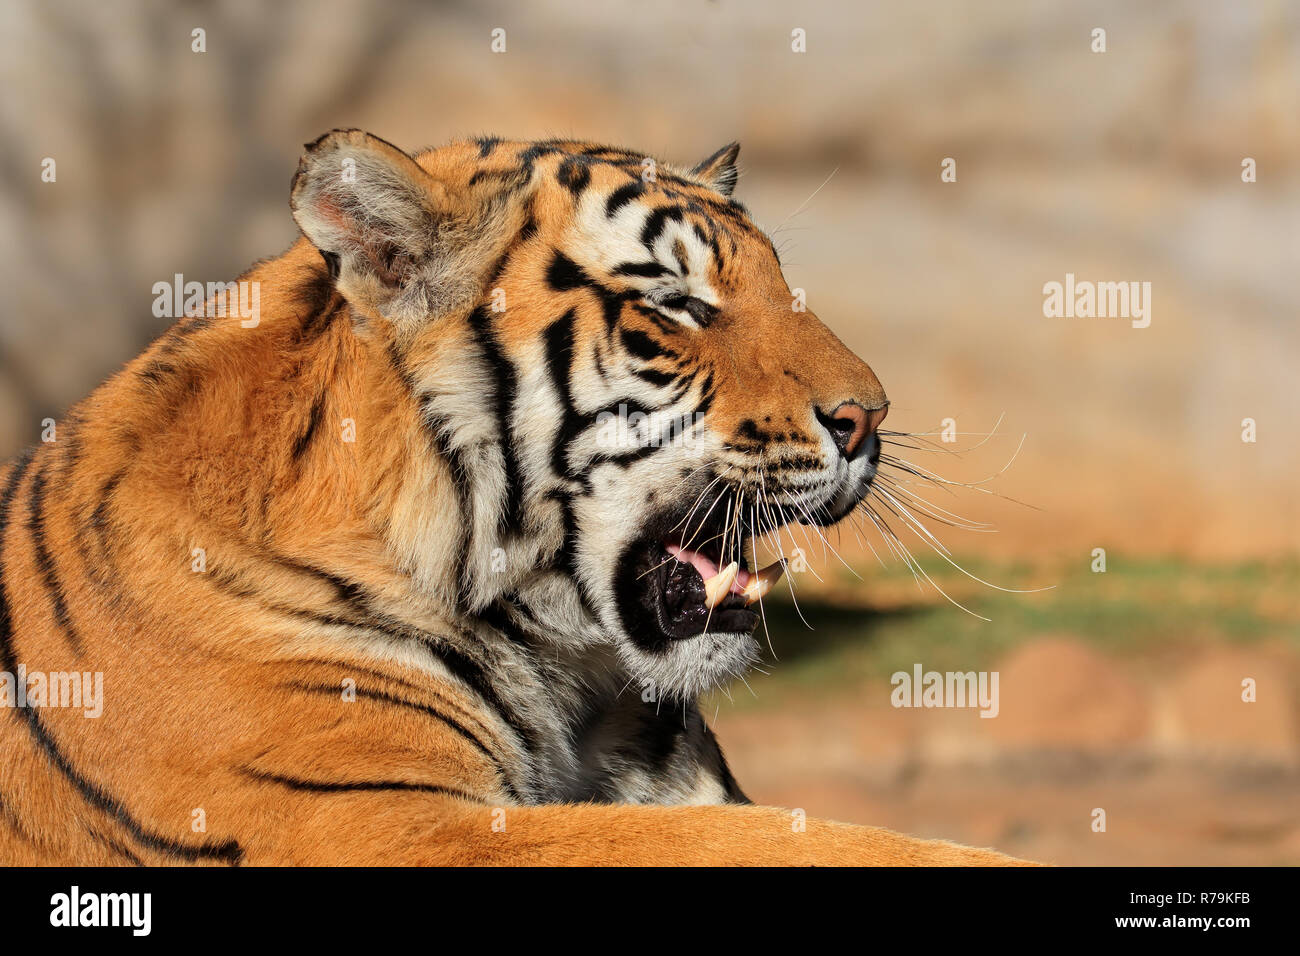 Bengal tiger portrait Stock Photo